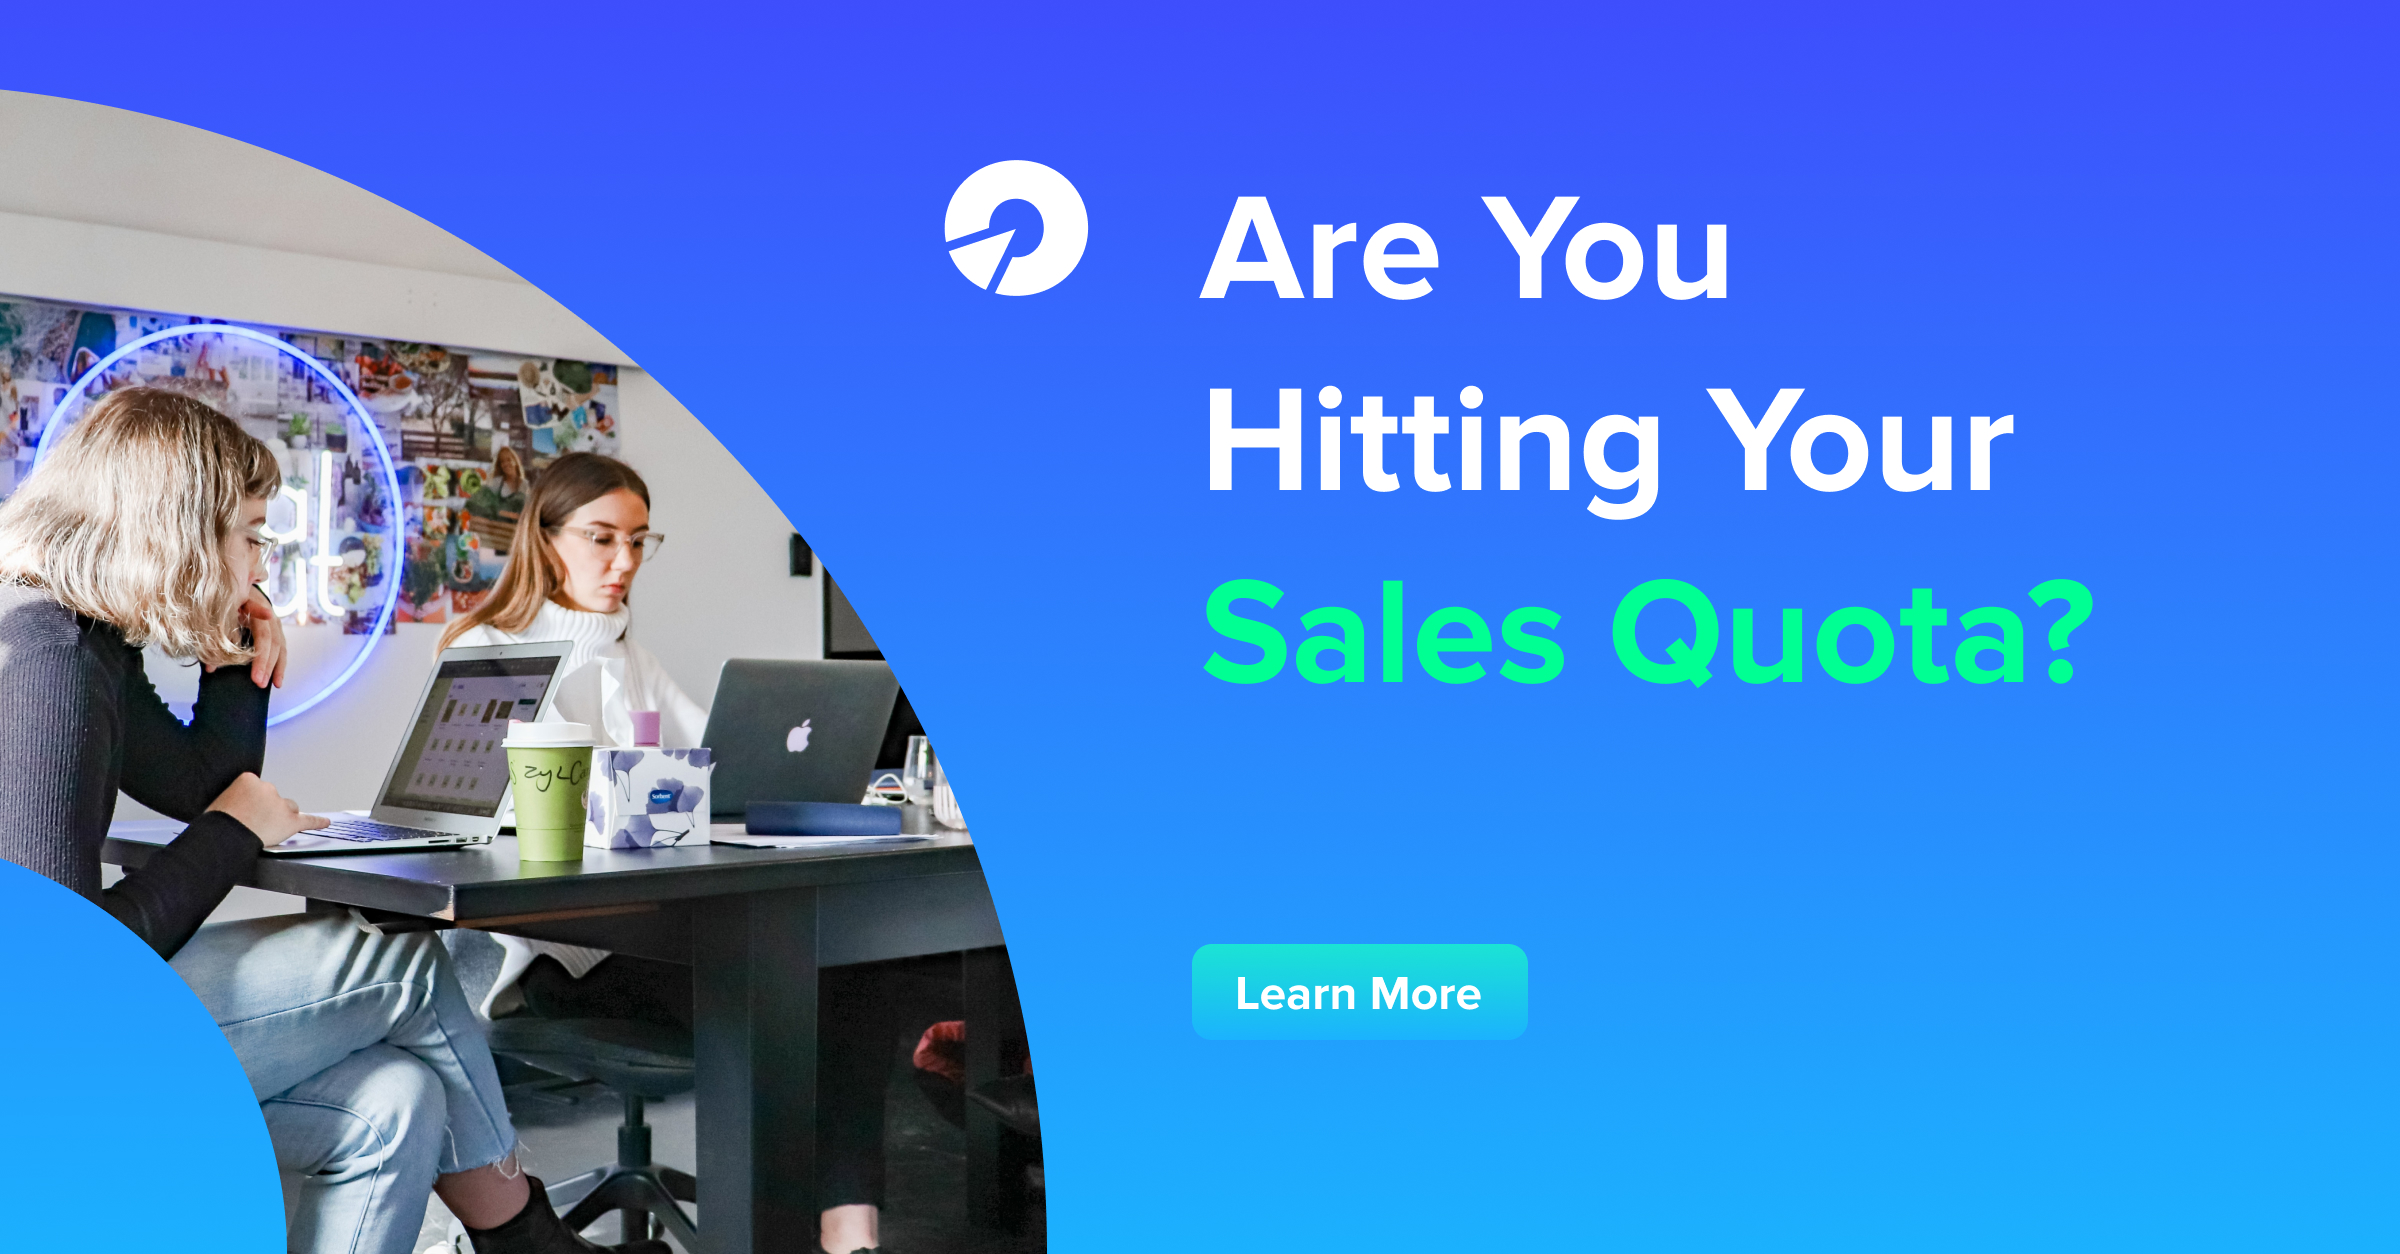 Hitting Your Sales Quota?